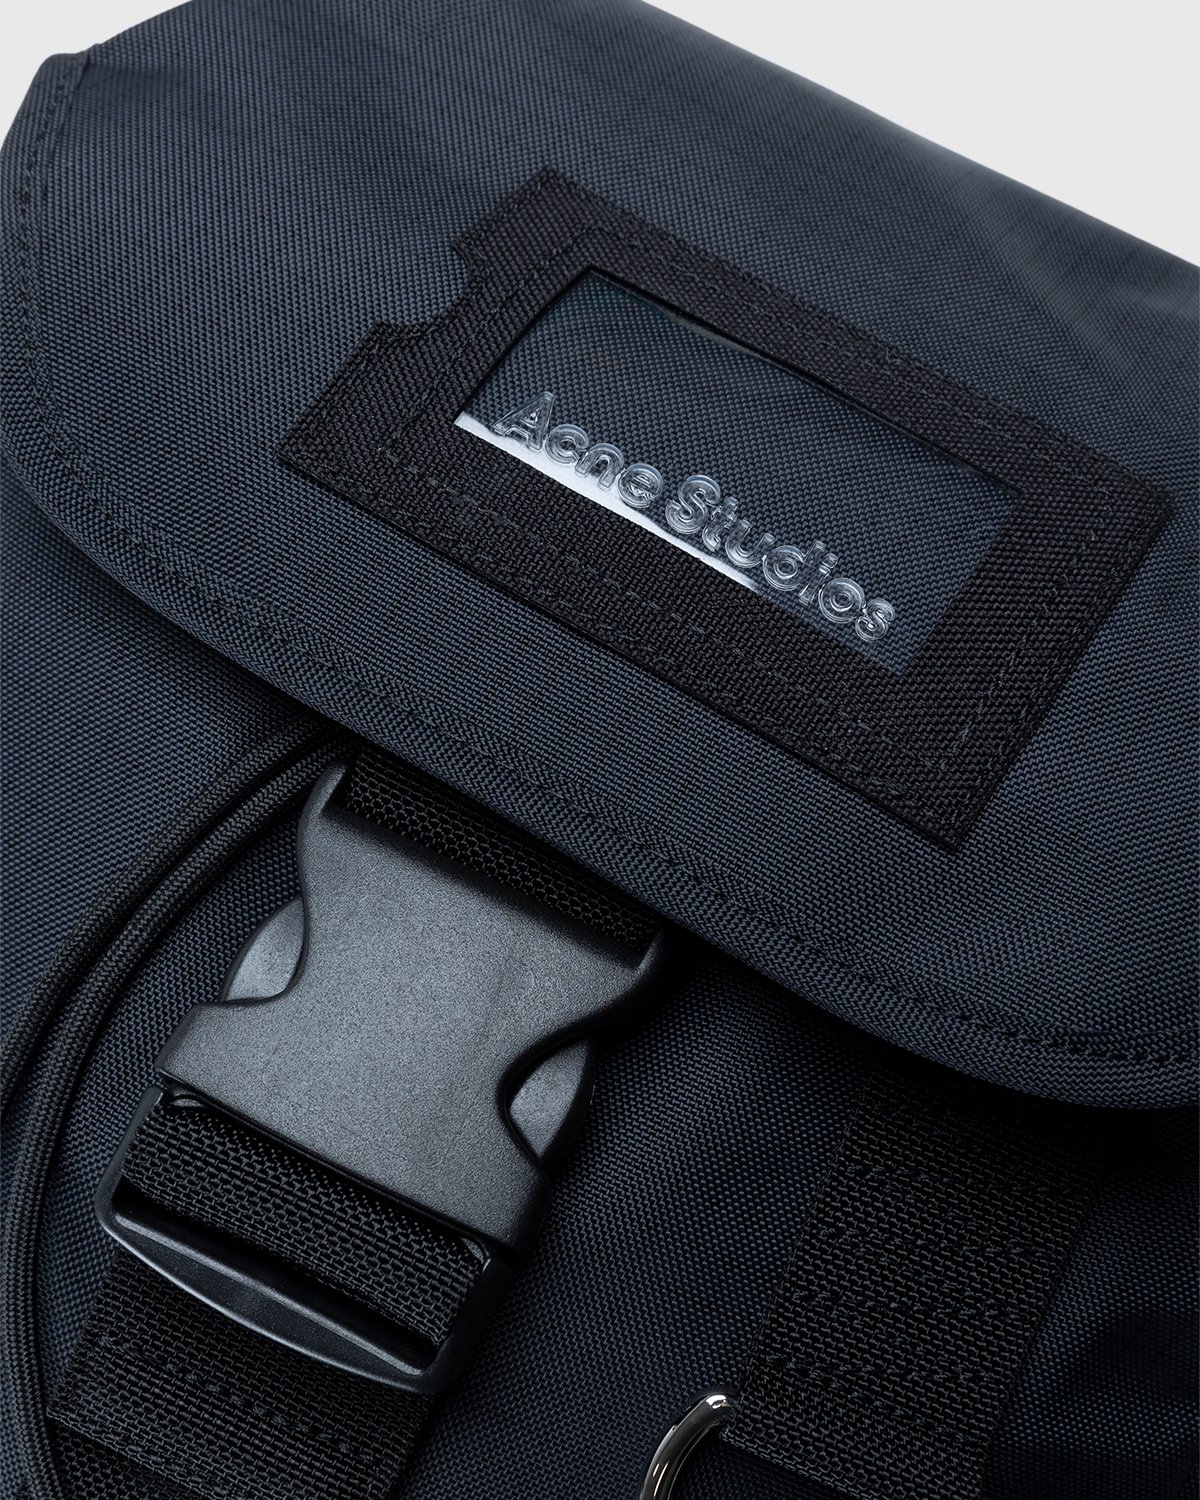 Acne Studios - Large Ripstop Backpack Black - Accessories - Black - Image 4